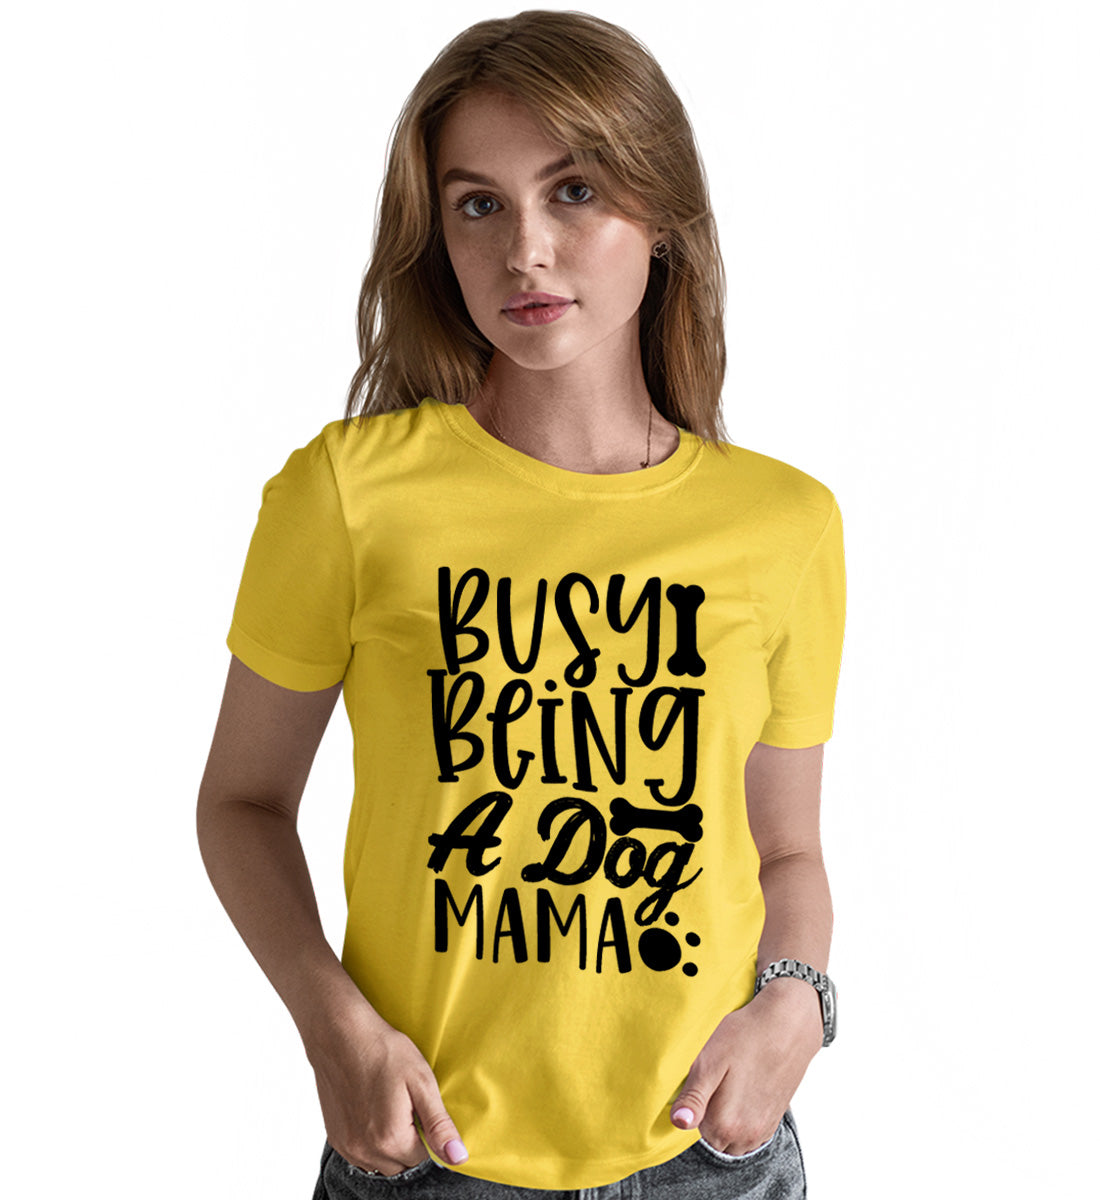 Dog mama - Pet Lover Unisex Printed Tshirt